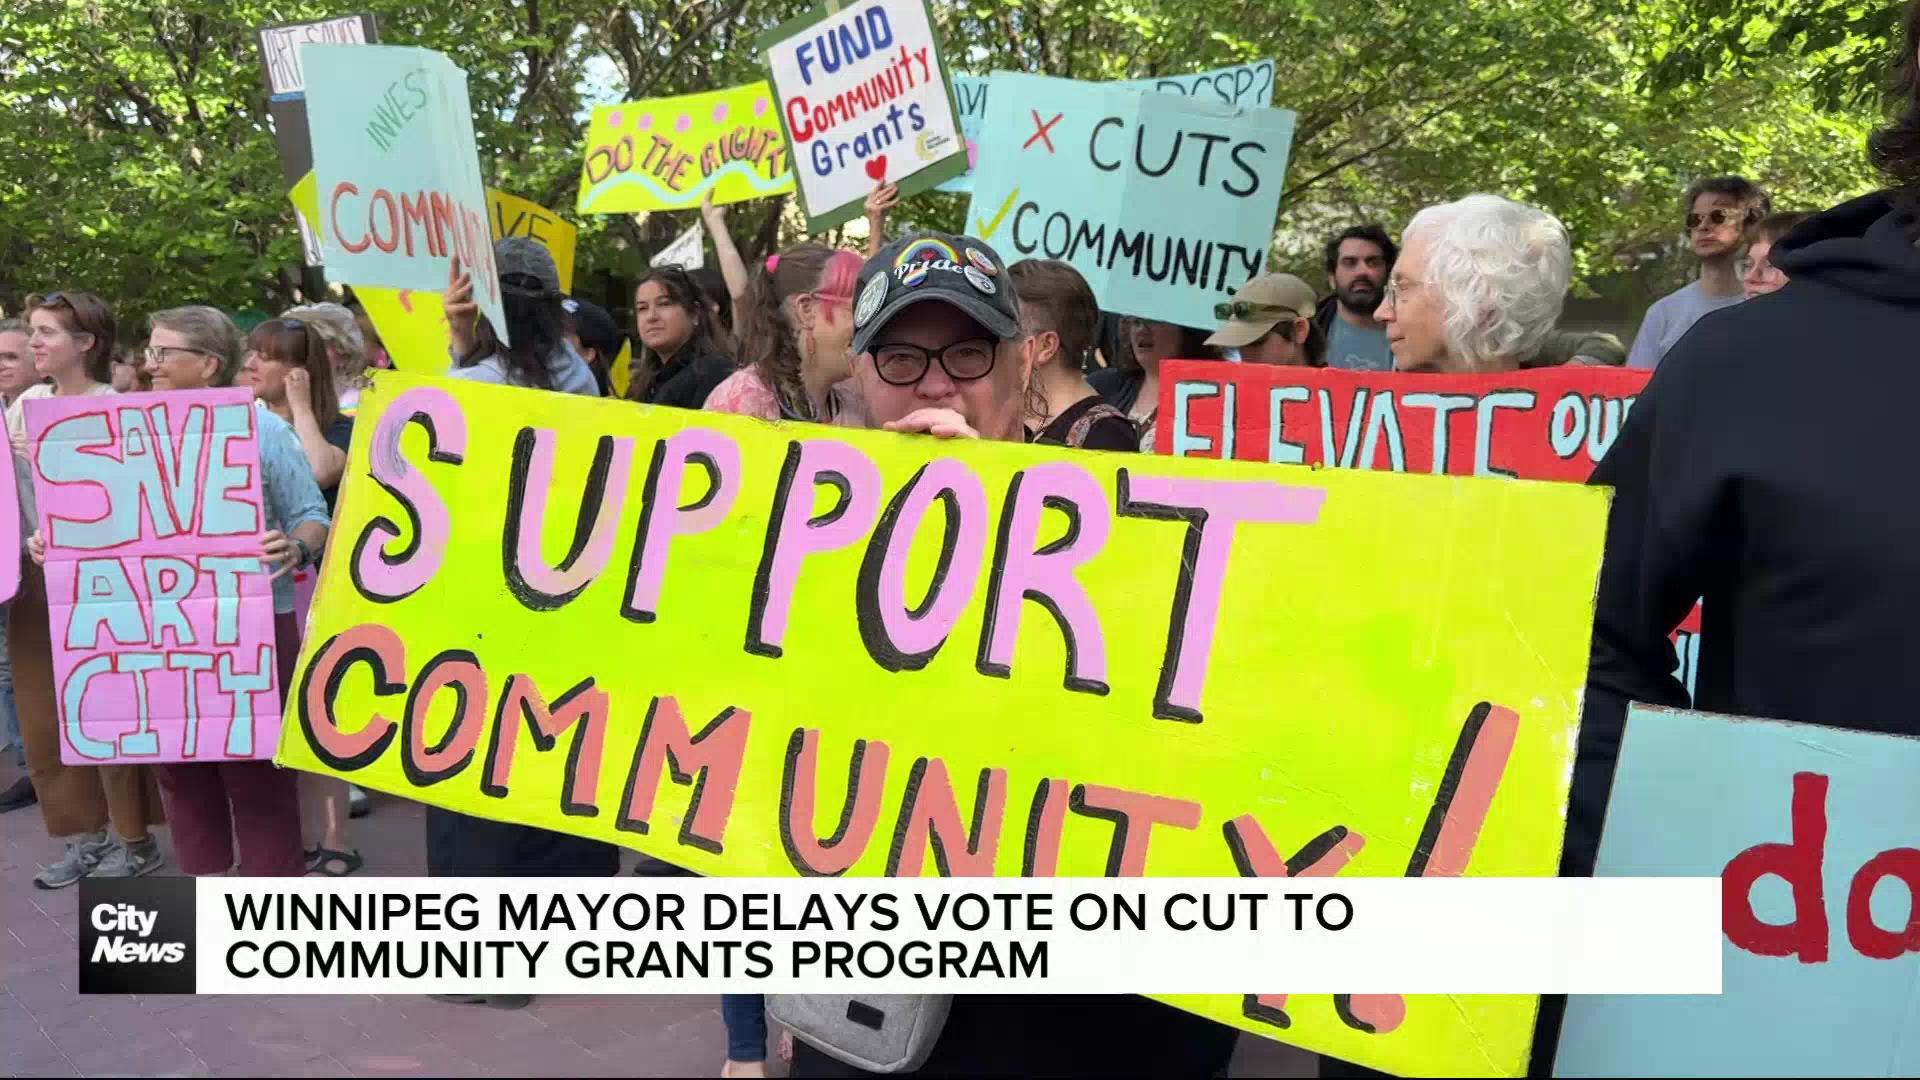 Winnipeg Mayor delays vote on cut to community grants program